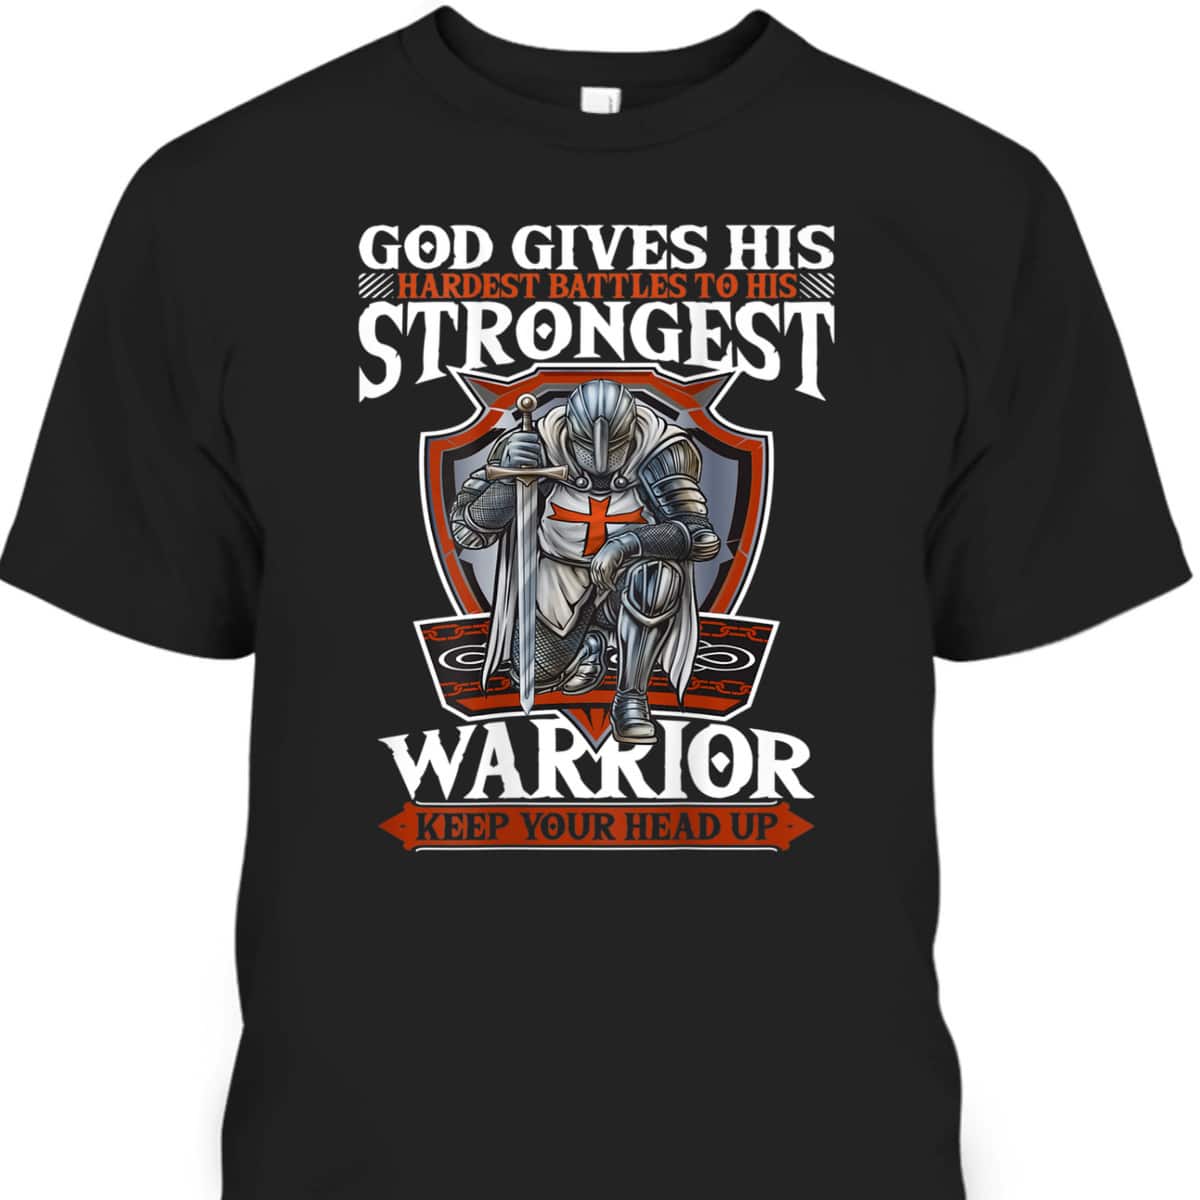 Armor Of God T-Shirt Medieval Crusader Knight Templar Warrior Keep Your Head Up